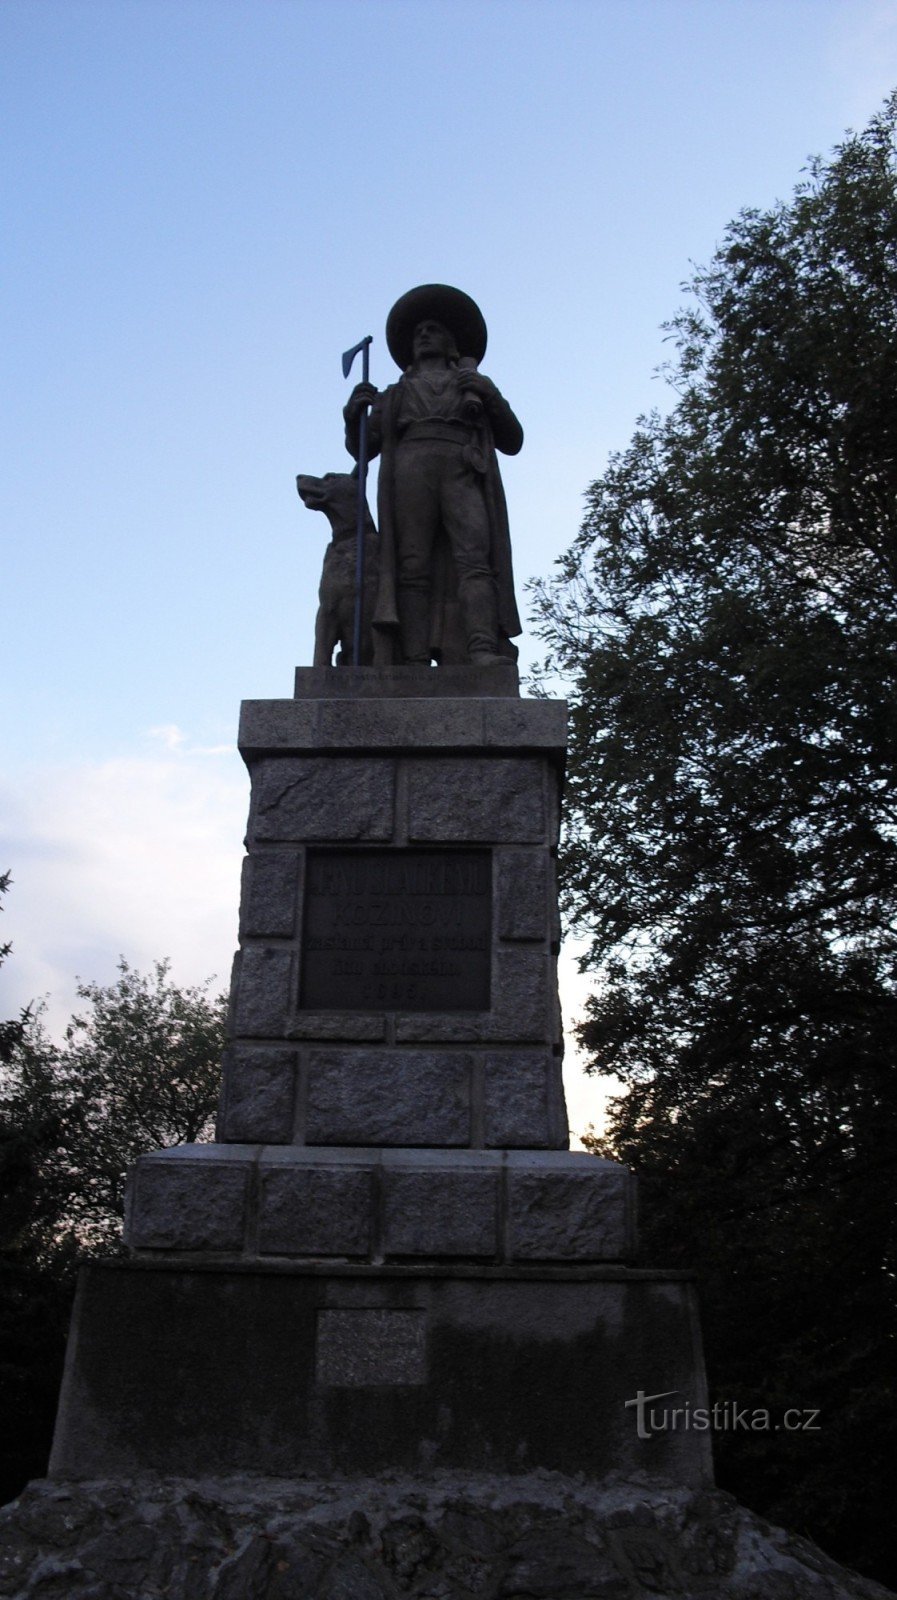 Koziny monument